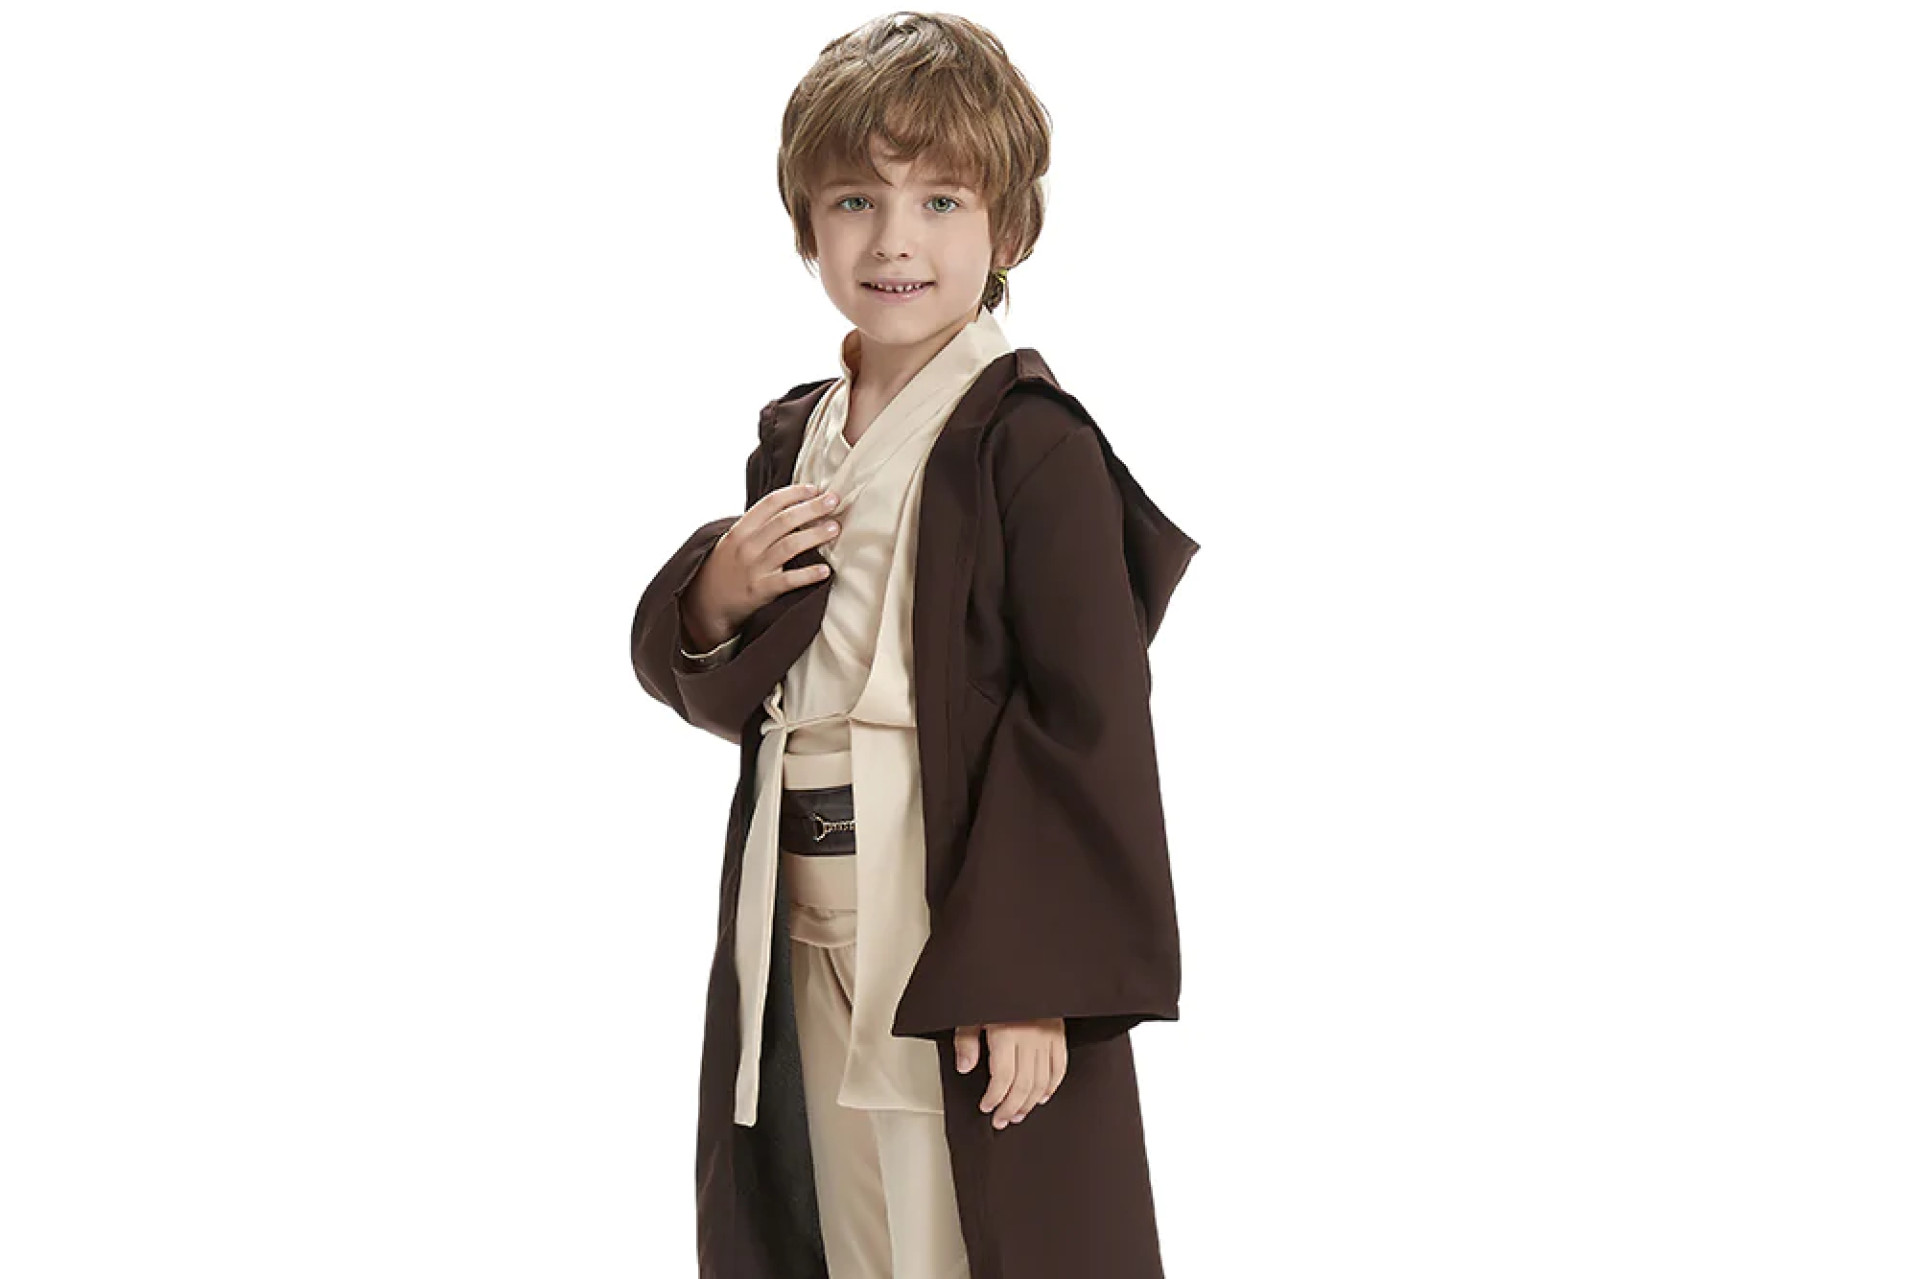 Garçon déguisé en Luke Skywalker